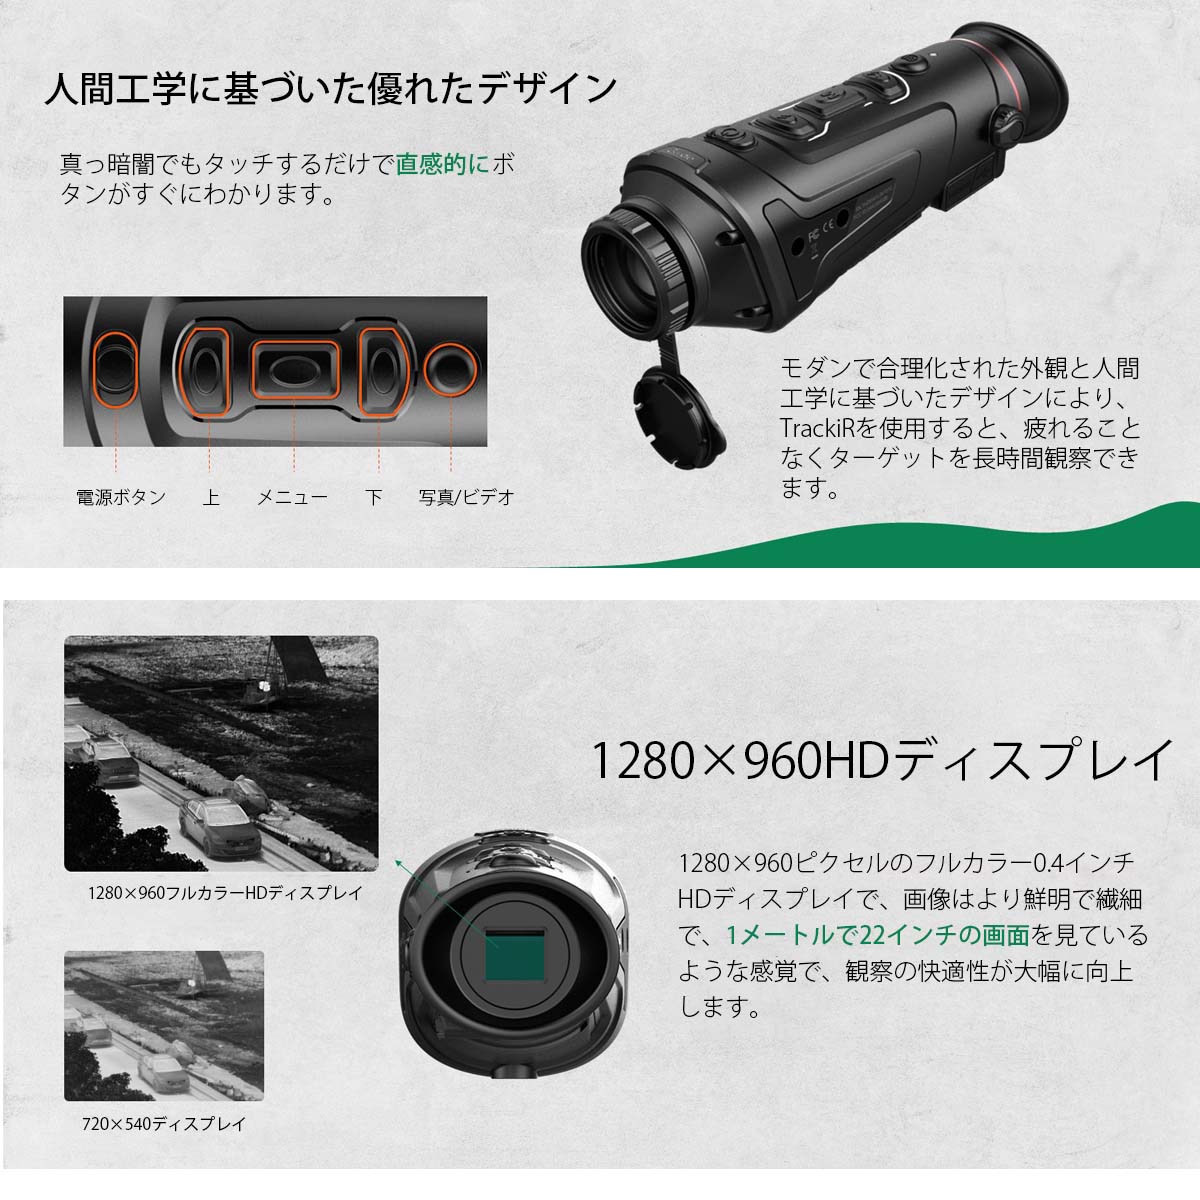 TrackIR-50mm